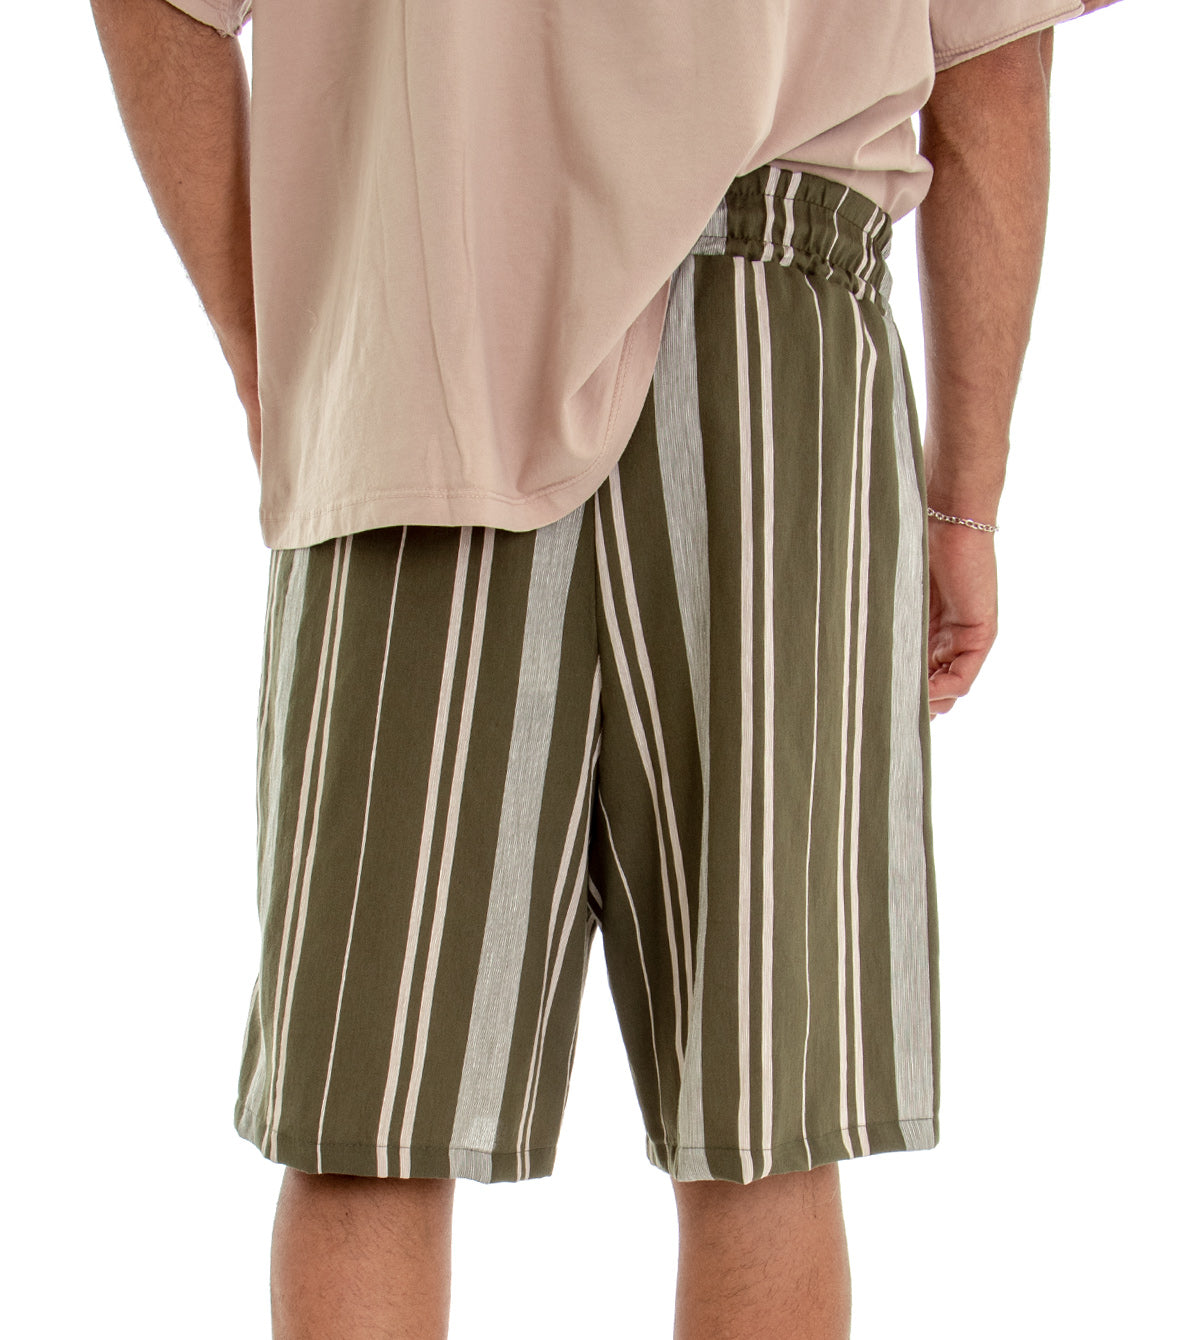 Bermuda Pantaloncino Uomo Shorts Rigato Verde Elastico GIOSAL-PC1542A